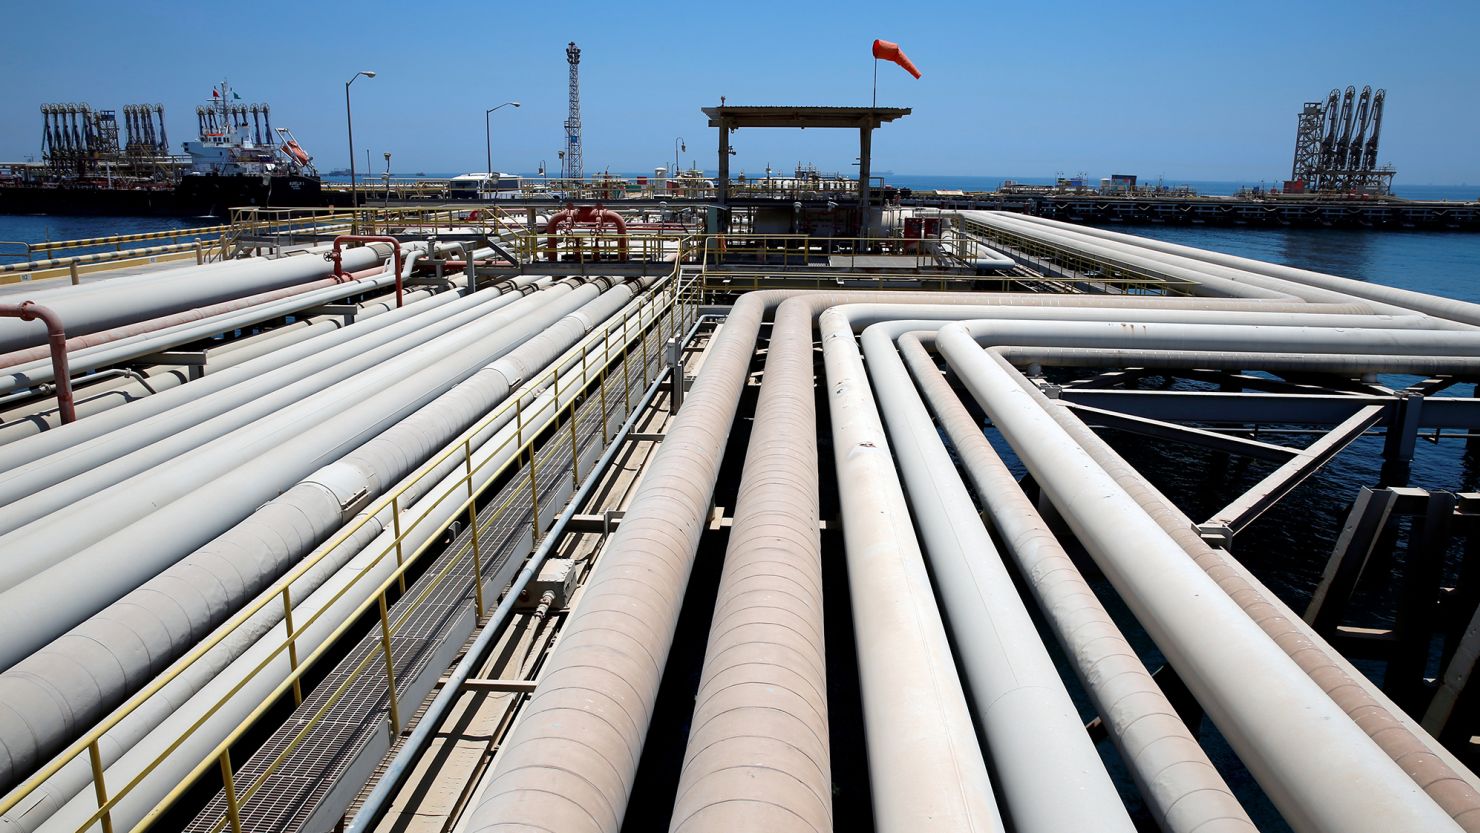 Saudi Aramco's Ras Tanura oil refinery and oil terminal